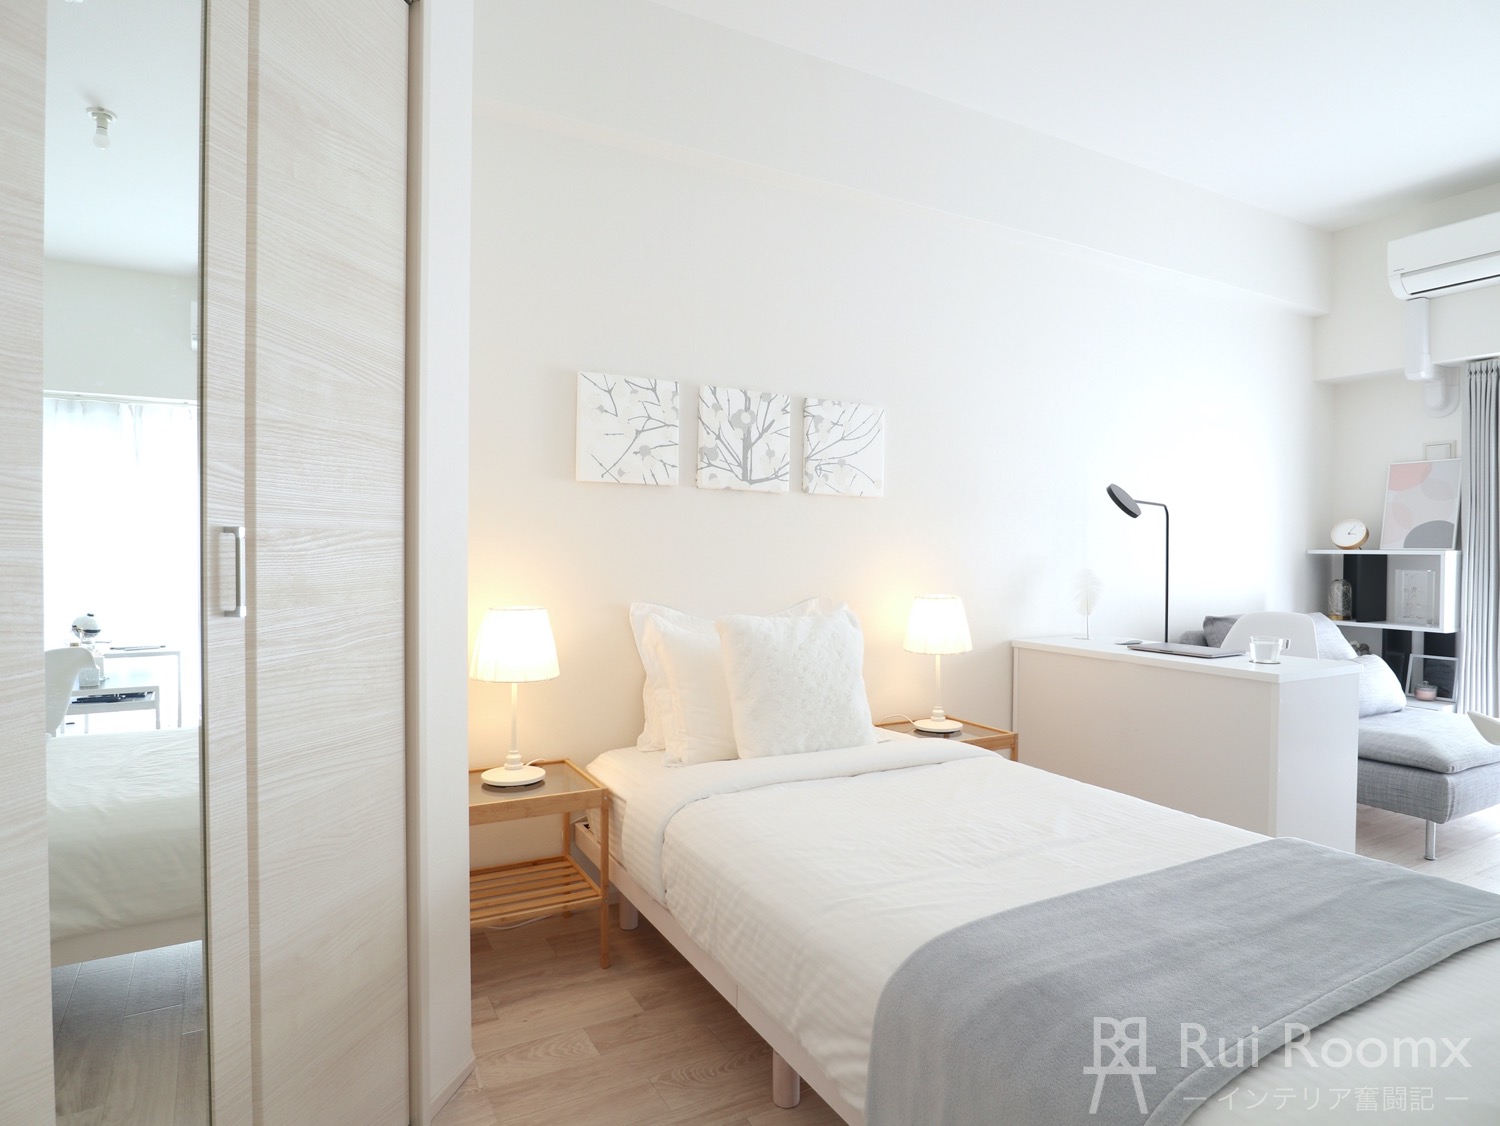 ruiroomx bedroom hotel-like-comforter-cover